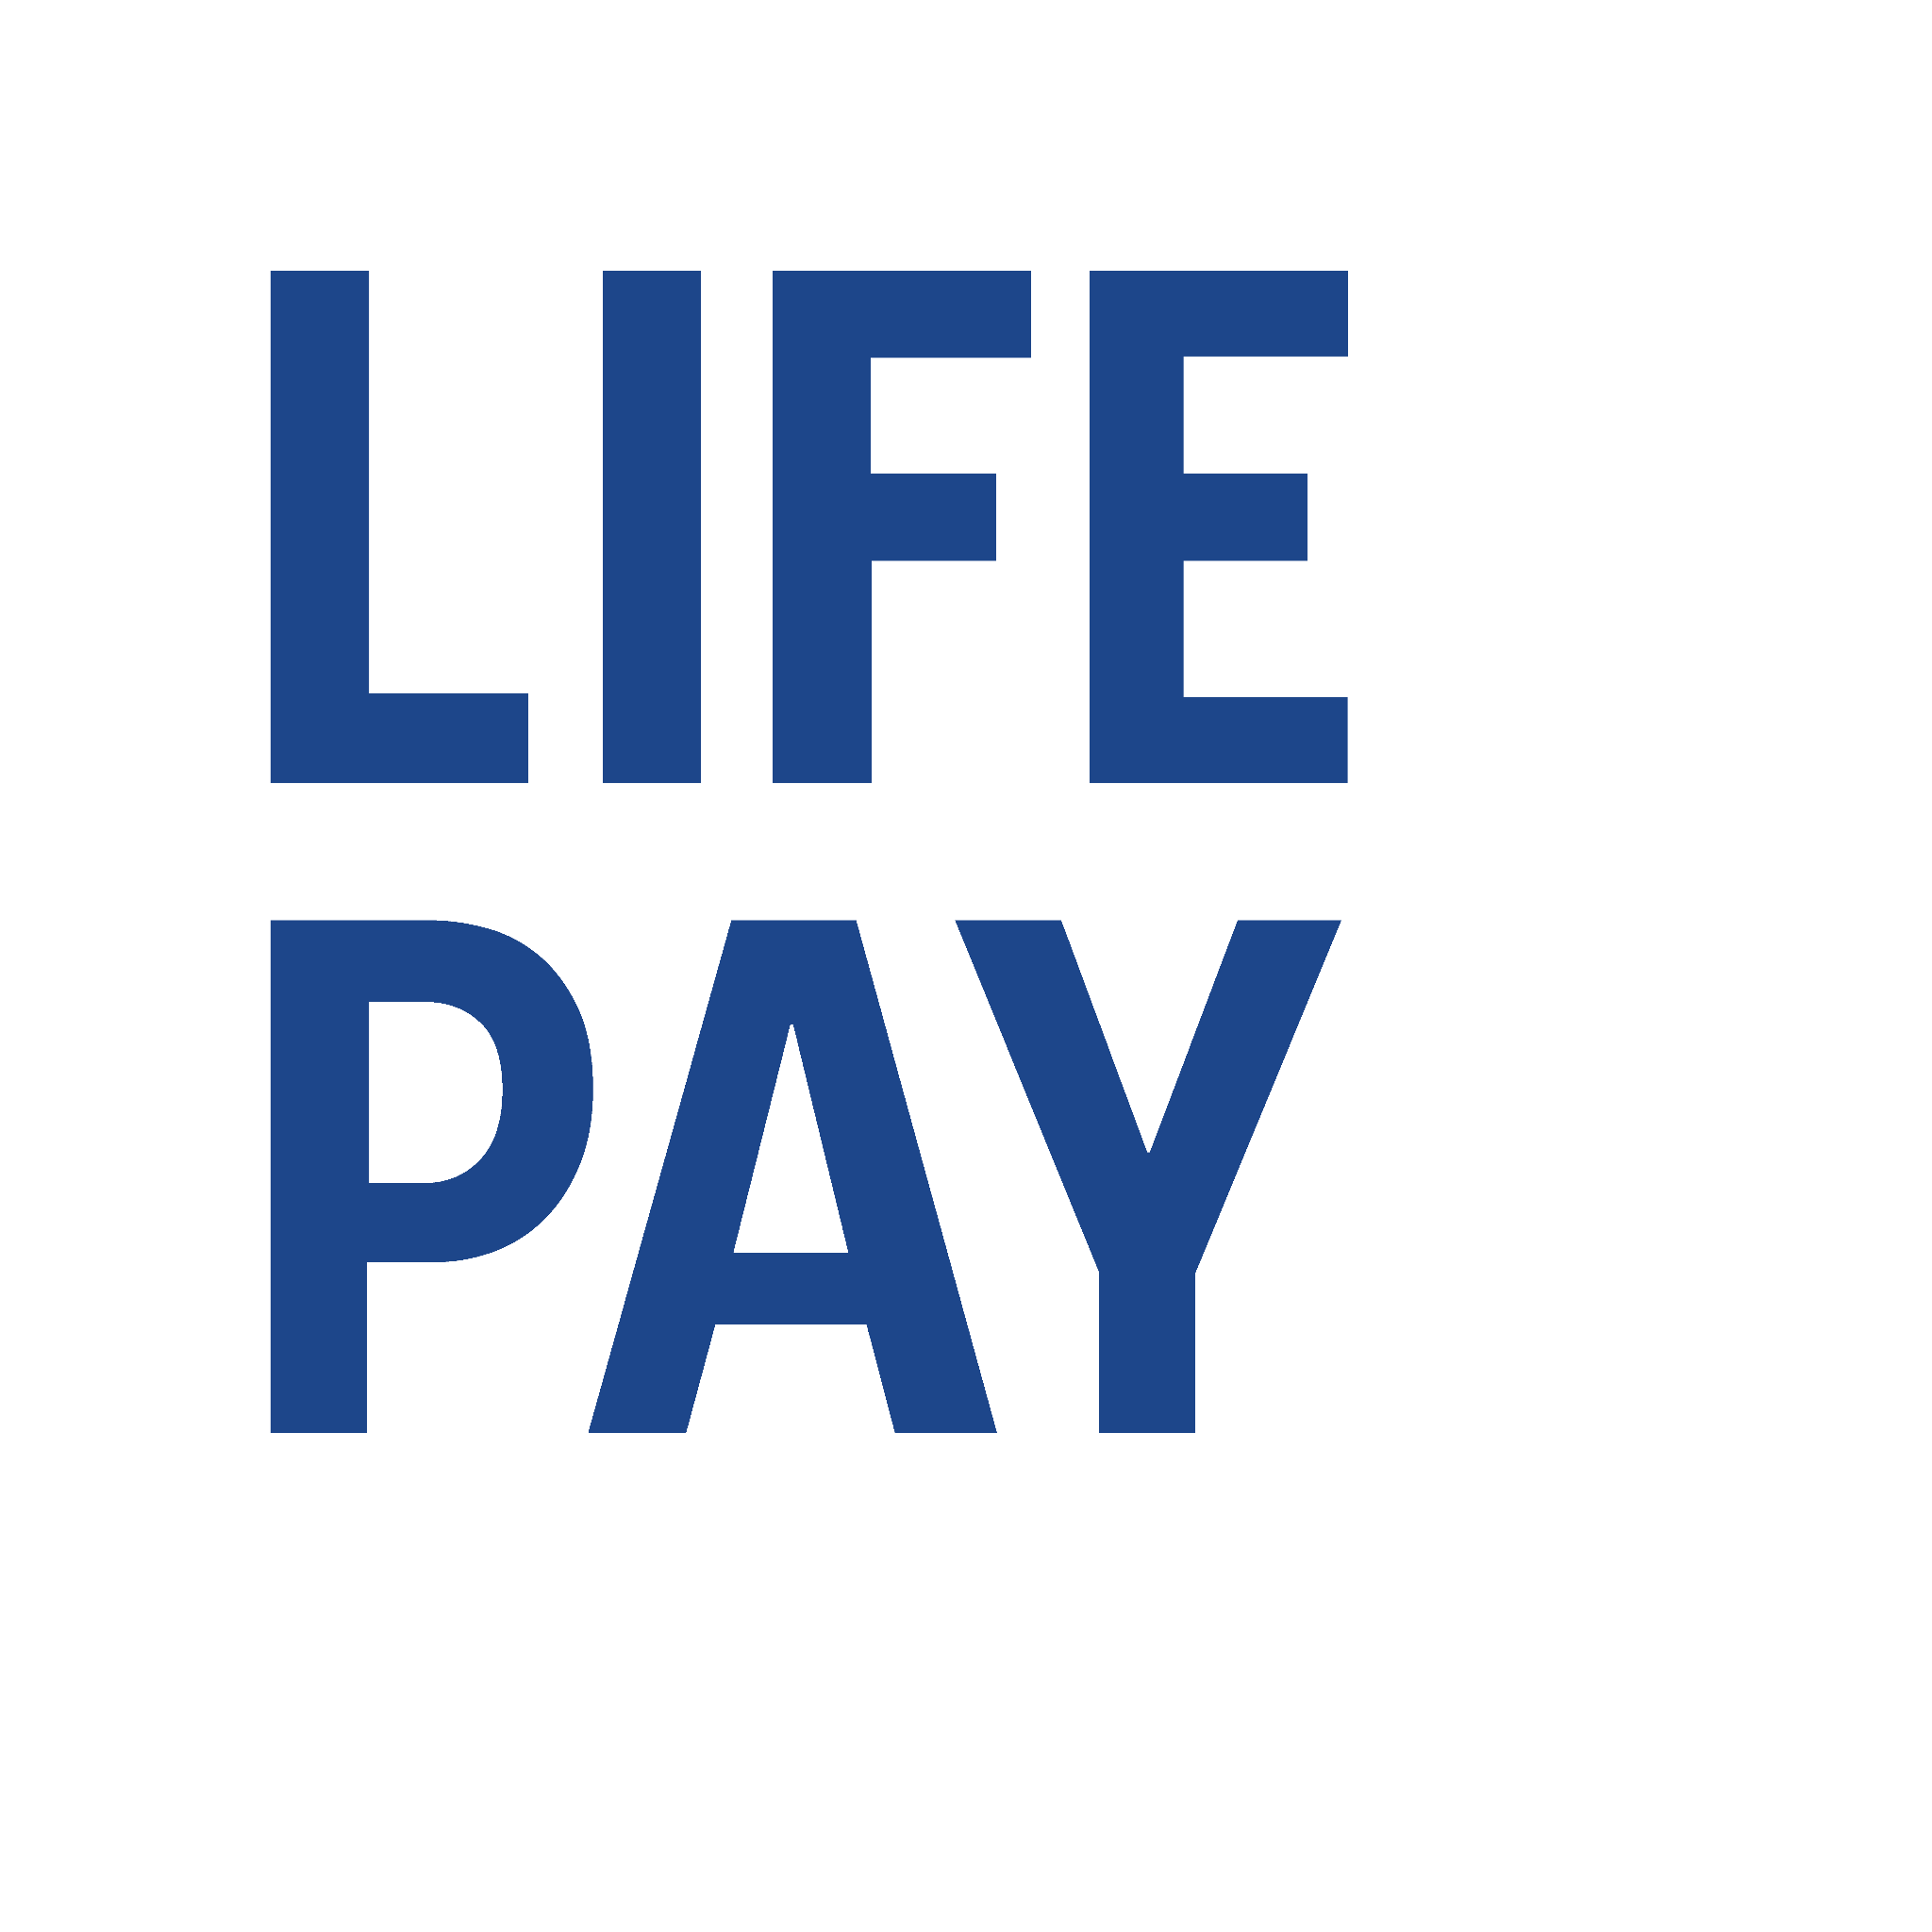 Lifepay - Life Pay - Платежный сервис провайдер, ПСП